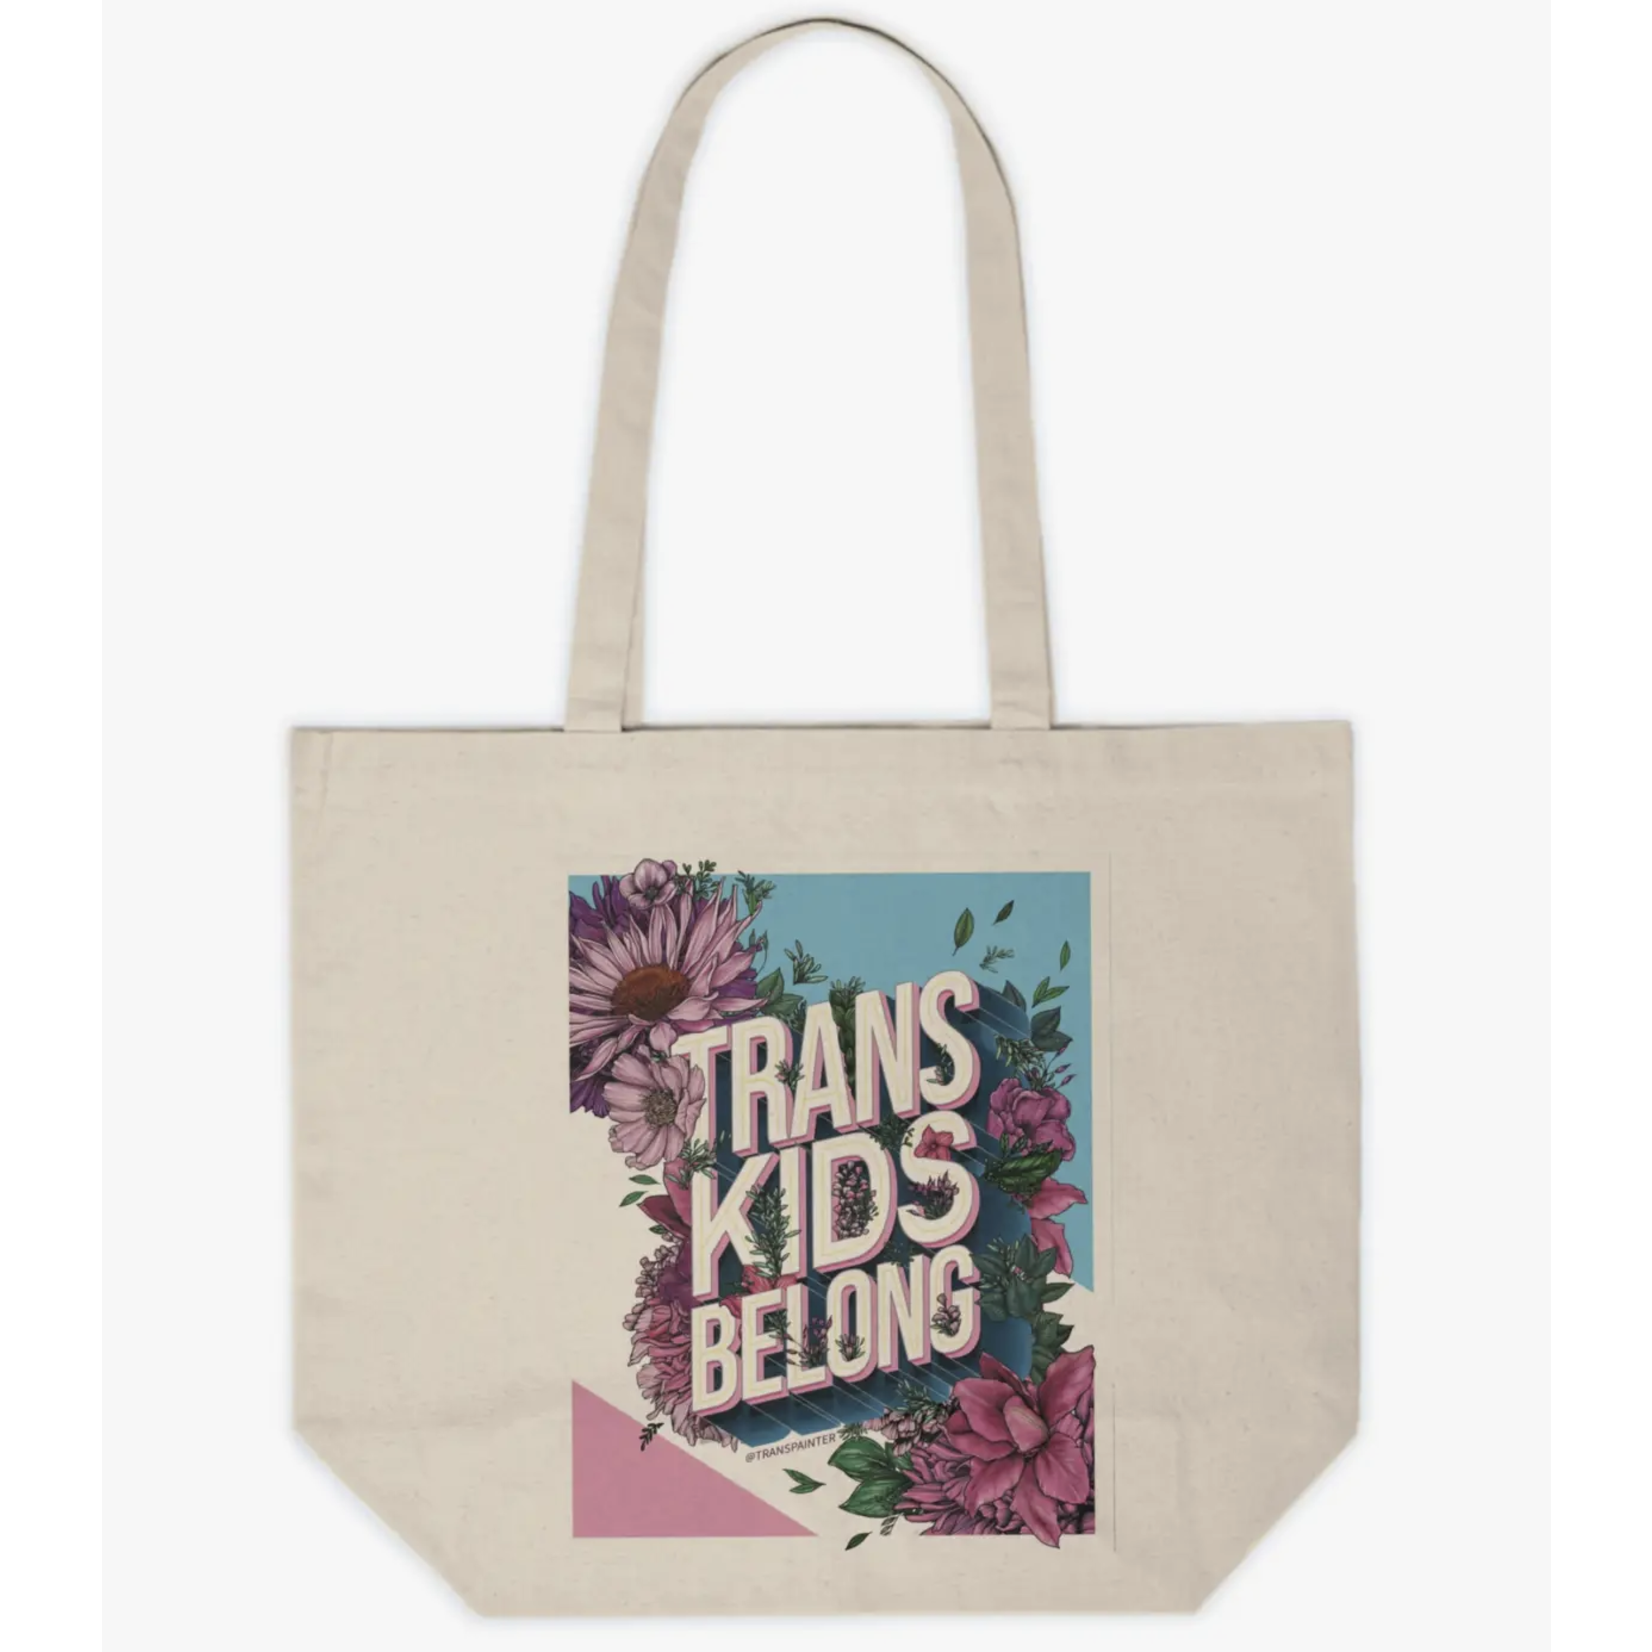 Transpainter Trans Kids Belong Tote Bag